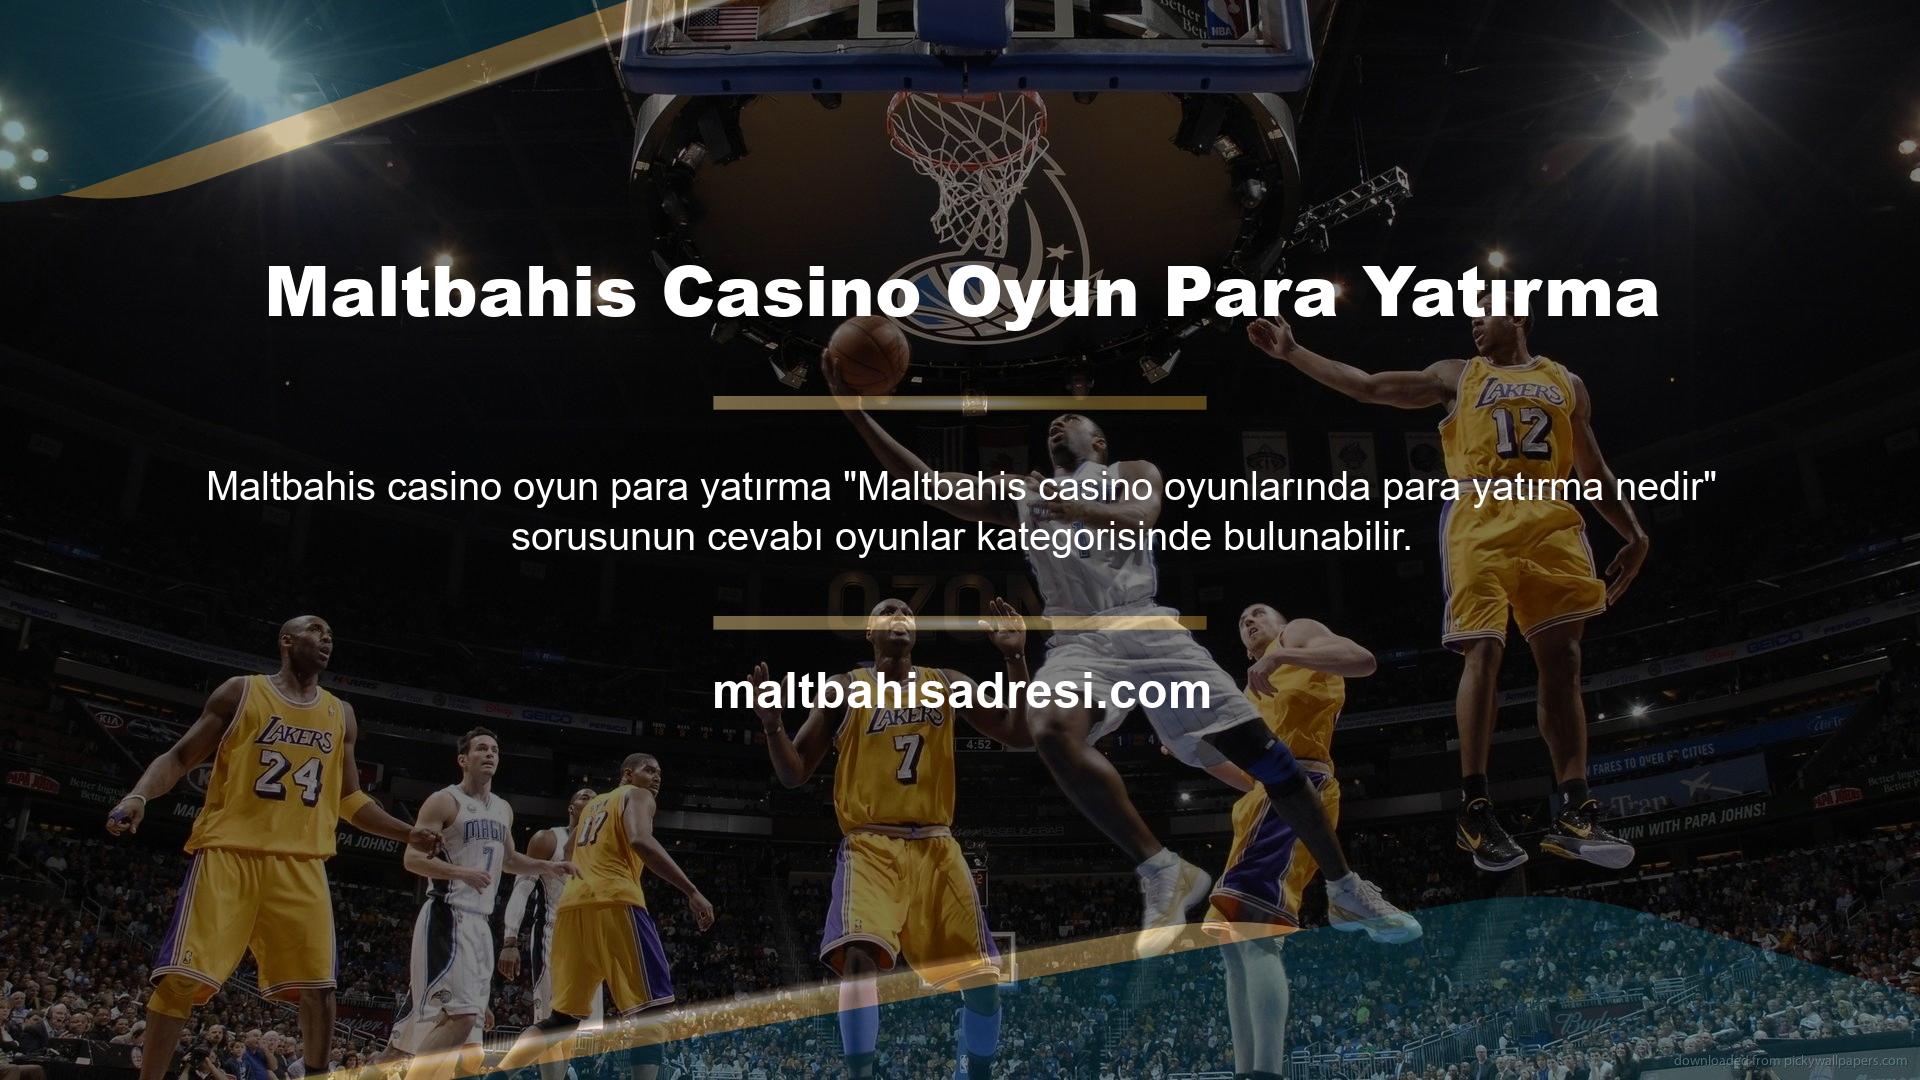 Maltbahis Casino Oyun Para Yatırma